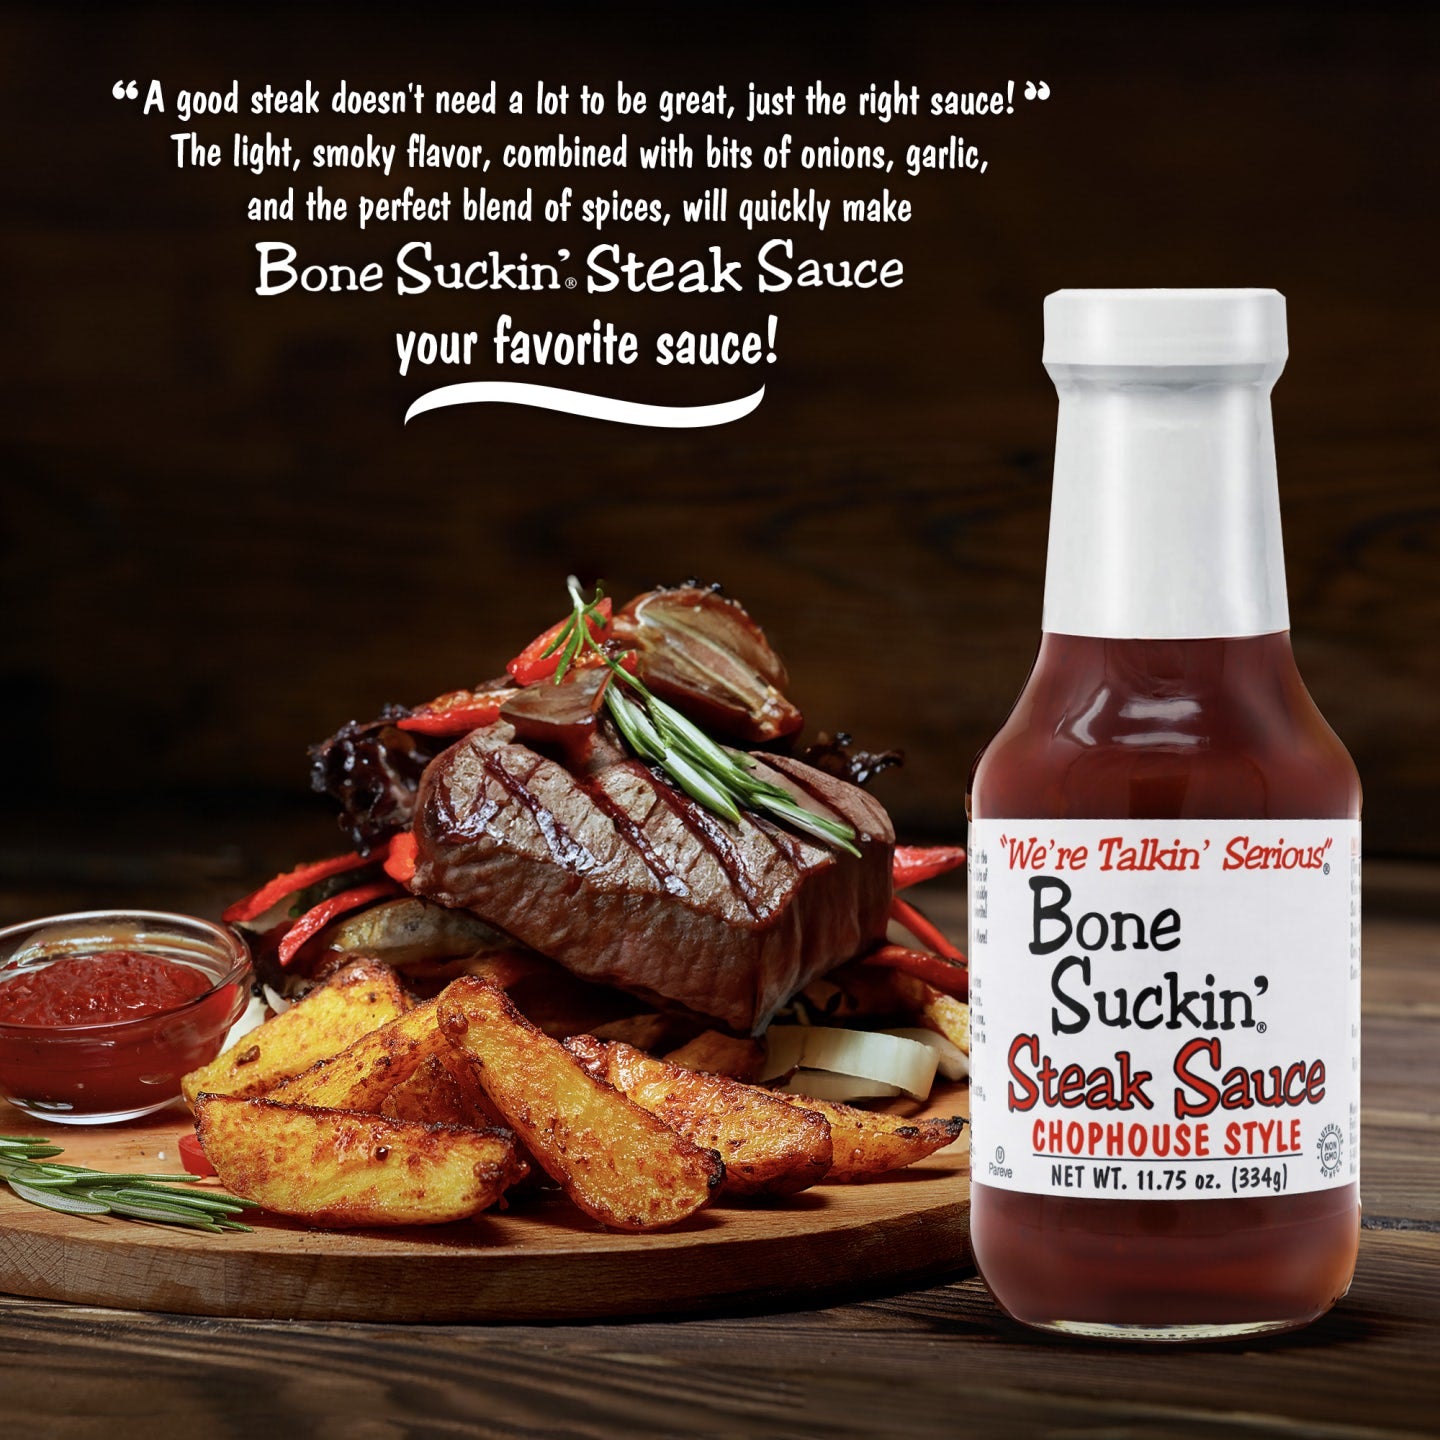 Bone Suckin' Steak Sauce, 11.75 oz Glass Bottle, For Steaks, Burgers, Meatloaf, Pork Chops & Chicken - Tangy, Savory, Light Smoke Flavor With Bits Of Onion & Garlic - Gluten Free, Non-GMO, Kosher, 1 Pc